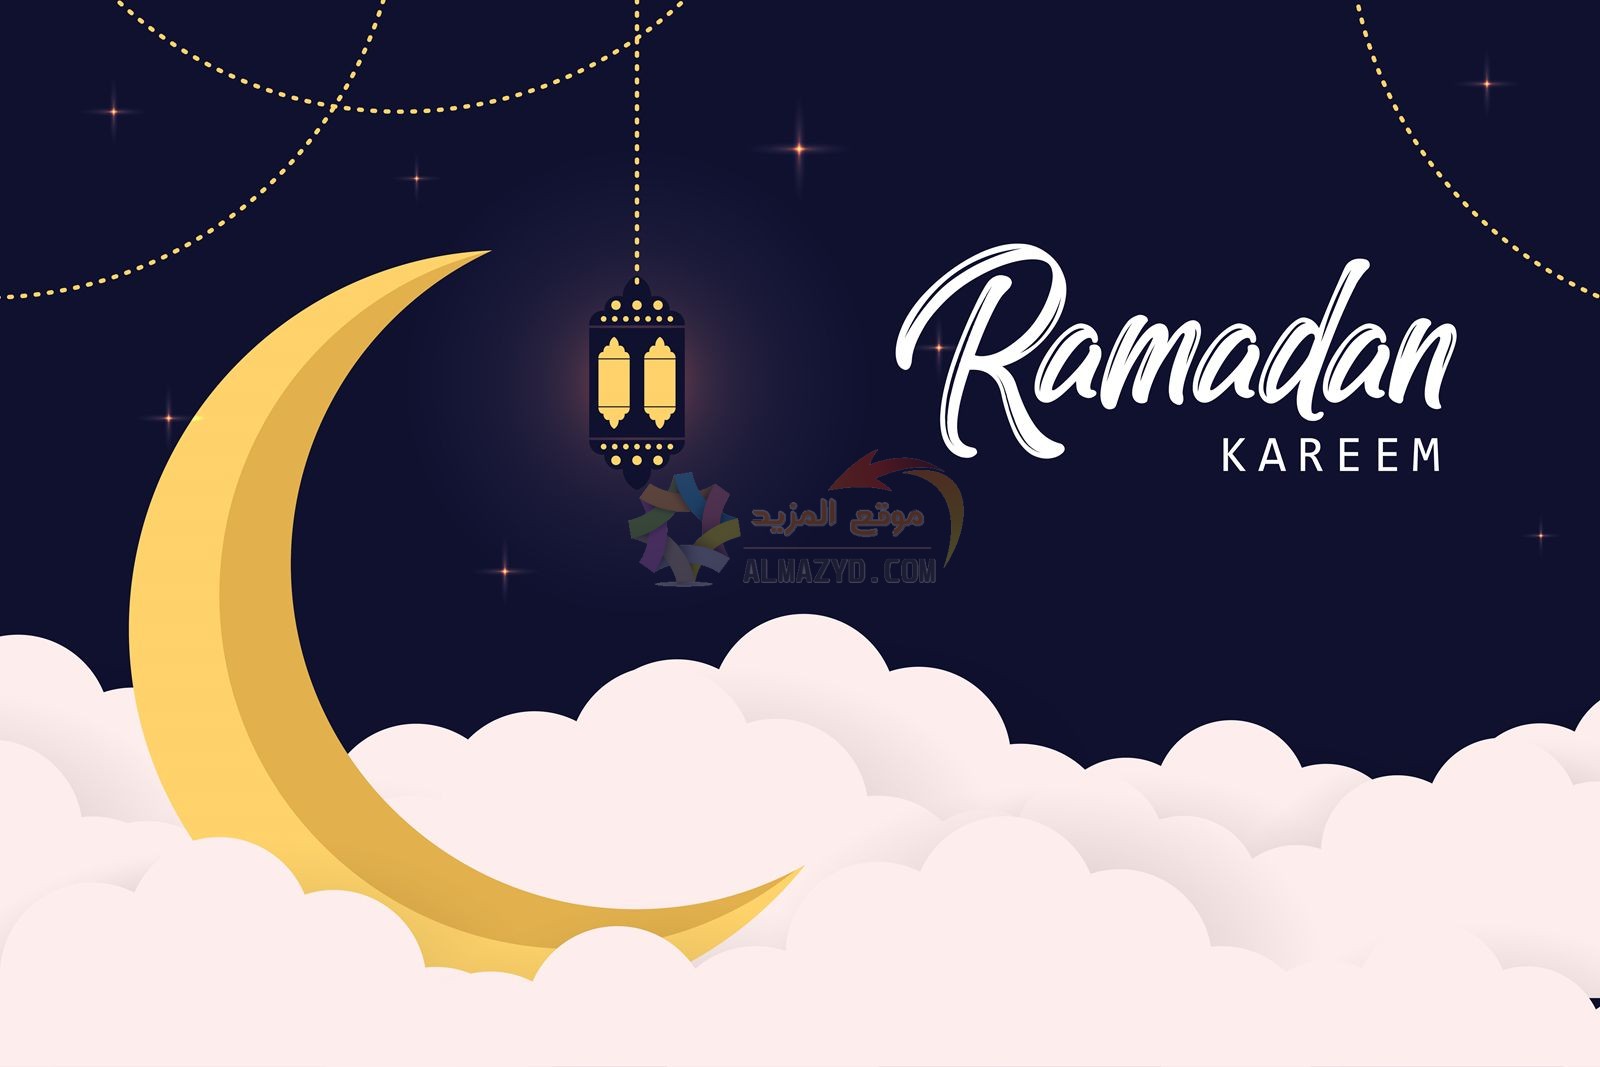 صور رمضان 2020 أجمل صور فوانيس رمضان 2021 بطاقات تهنئة لرمضان تهنئة رمضان بالأسماء 1